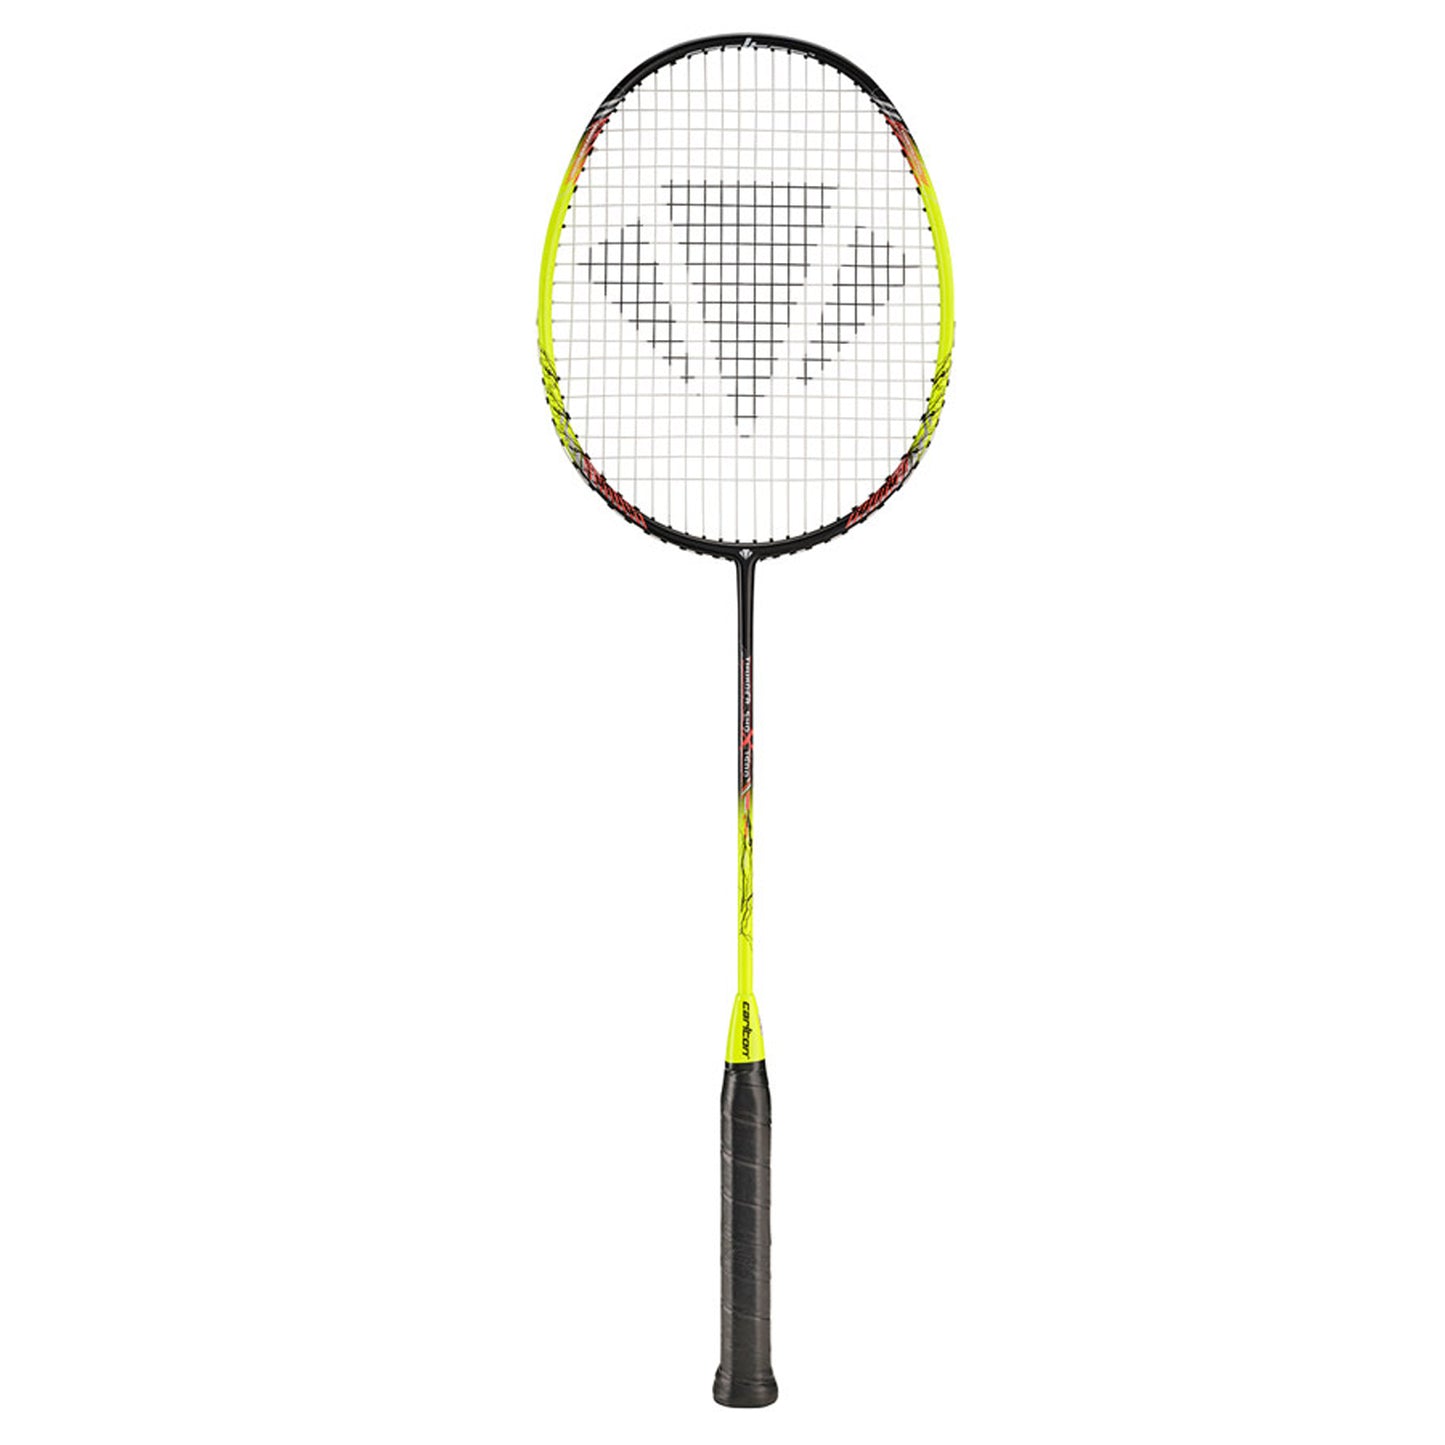 Carlton Thunder Shox 1500 Badminton Racquet, Lime - Best Price online Prokicksports.com